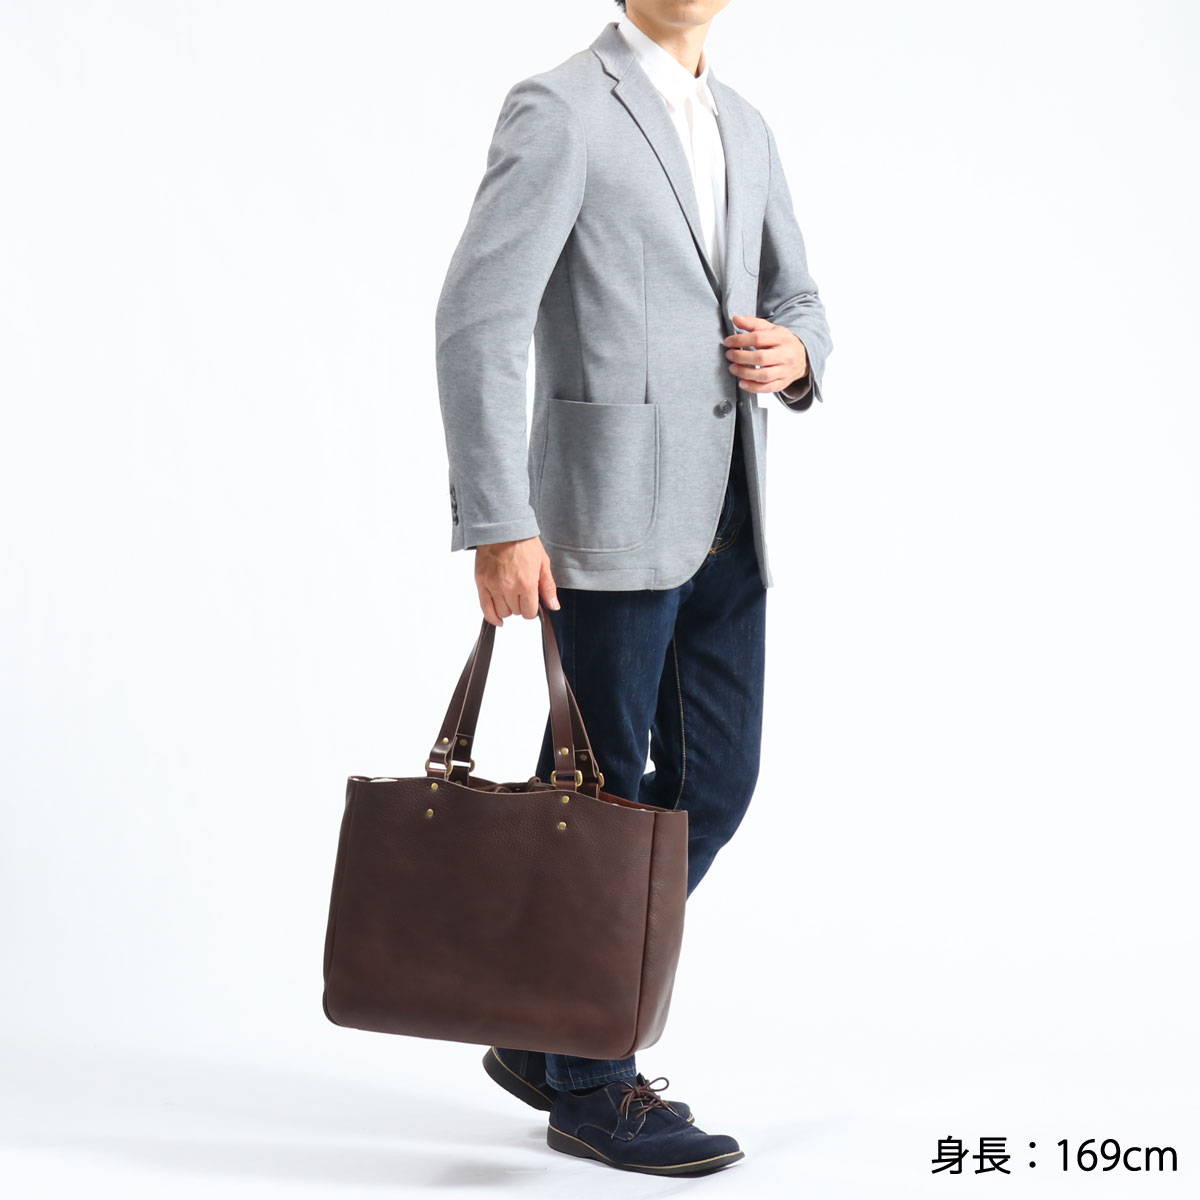 SLOW スロウ bono tote bag width type トートバッグ 4920003｜【正規